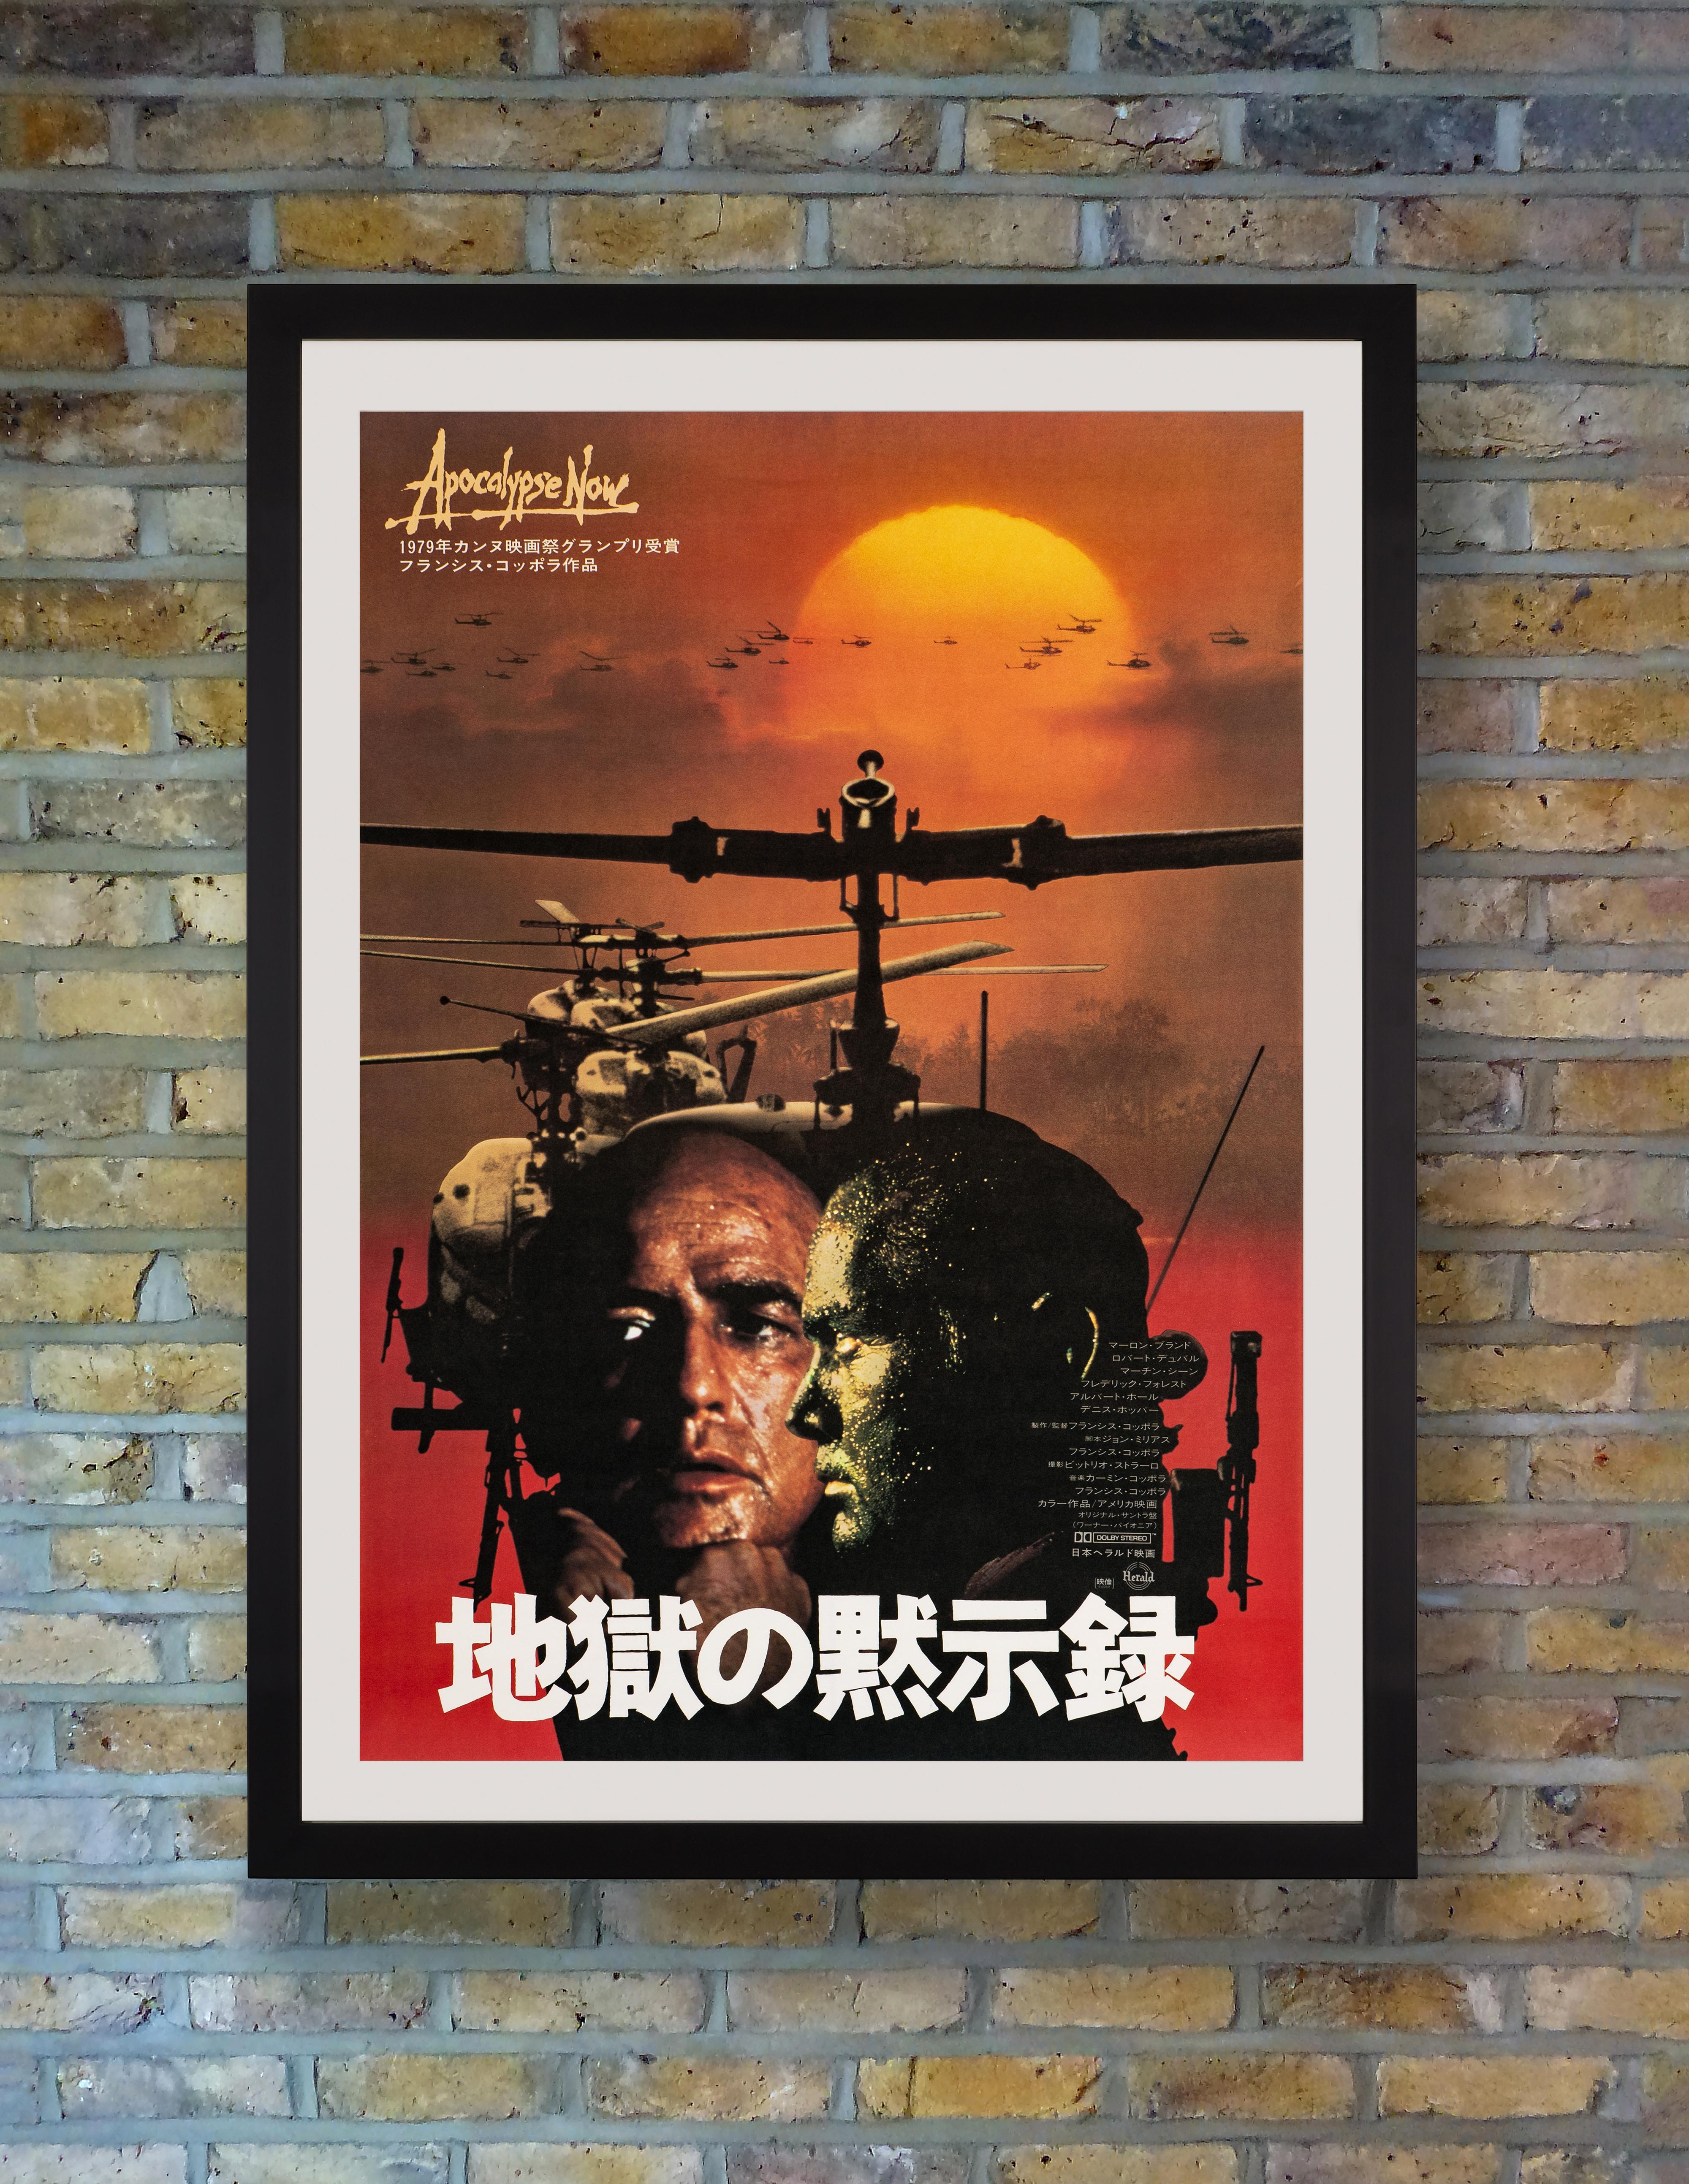 'Apocalypse Now' Original Vintage Japanese B2 Movie Poster, 1980 - Print by Bob Peak